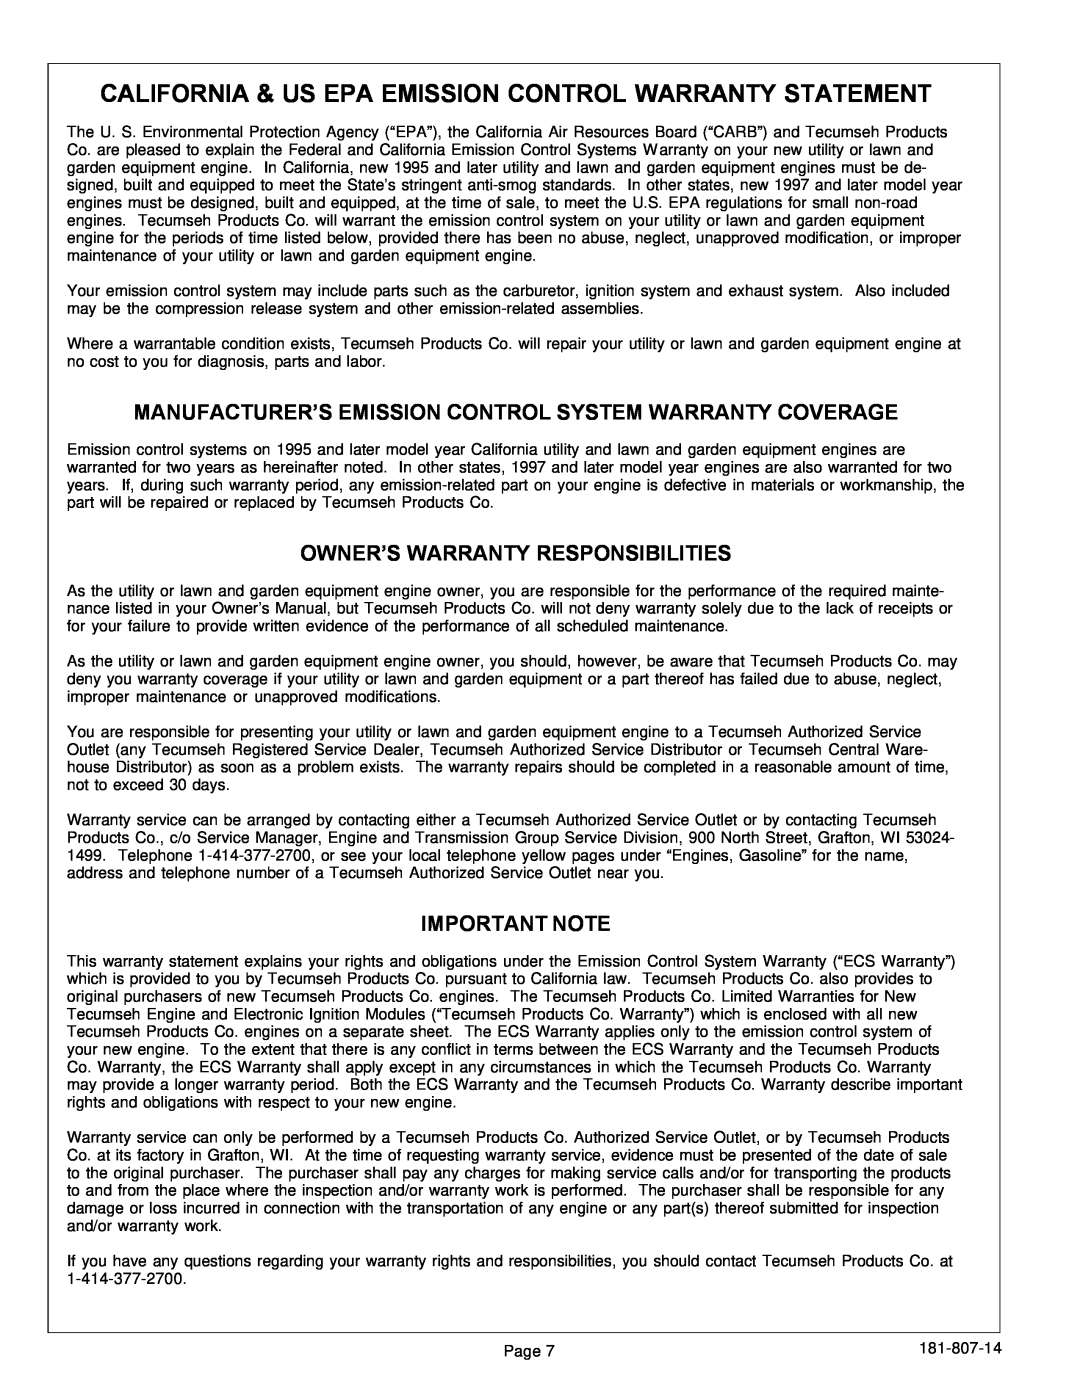 Tecumseh 850 California & Us Epa Emission Control Warranty Statement, Owner’S Warranty Responsibilities, Important Note 